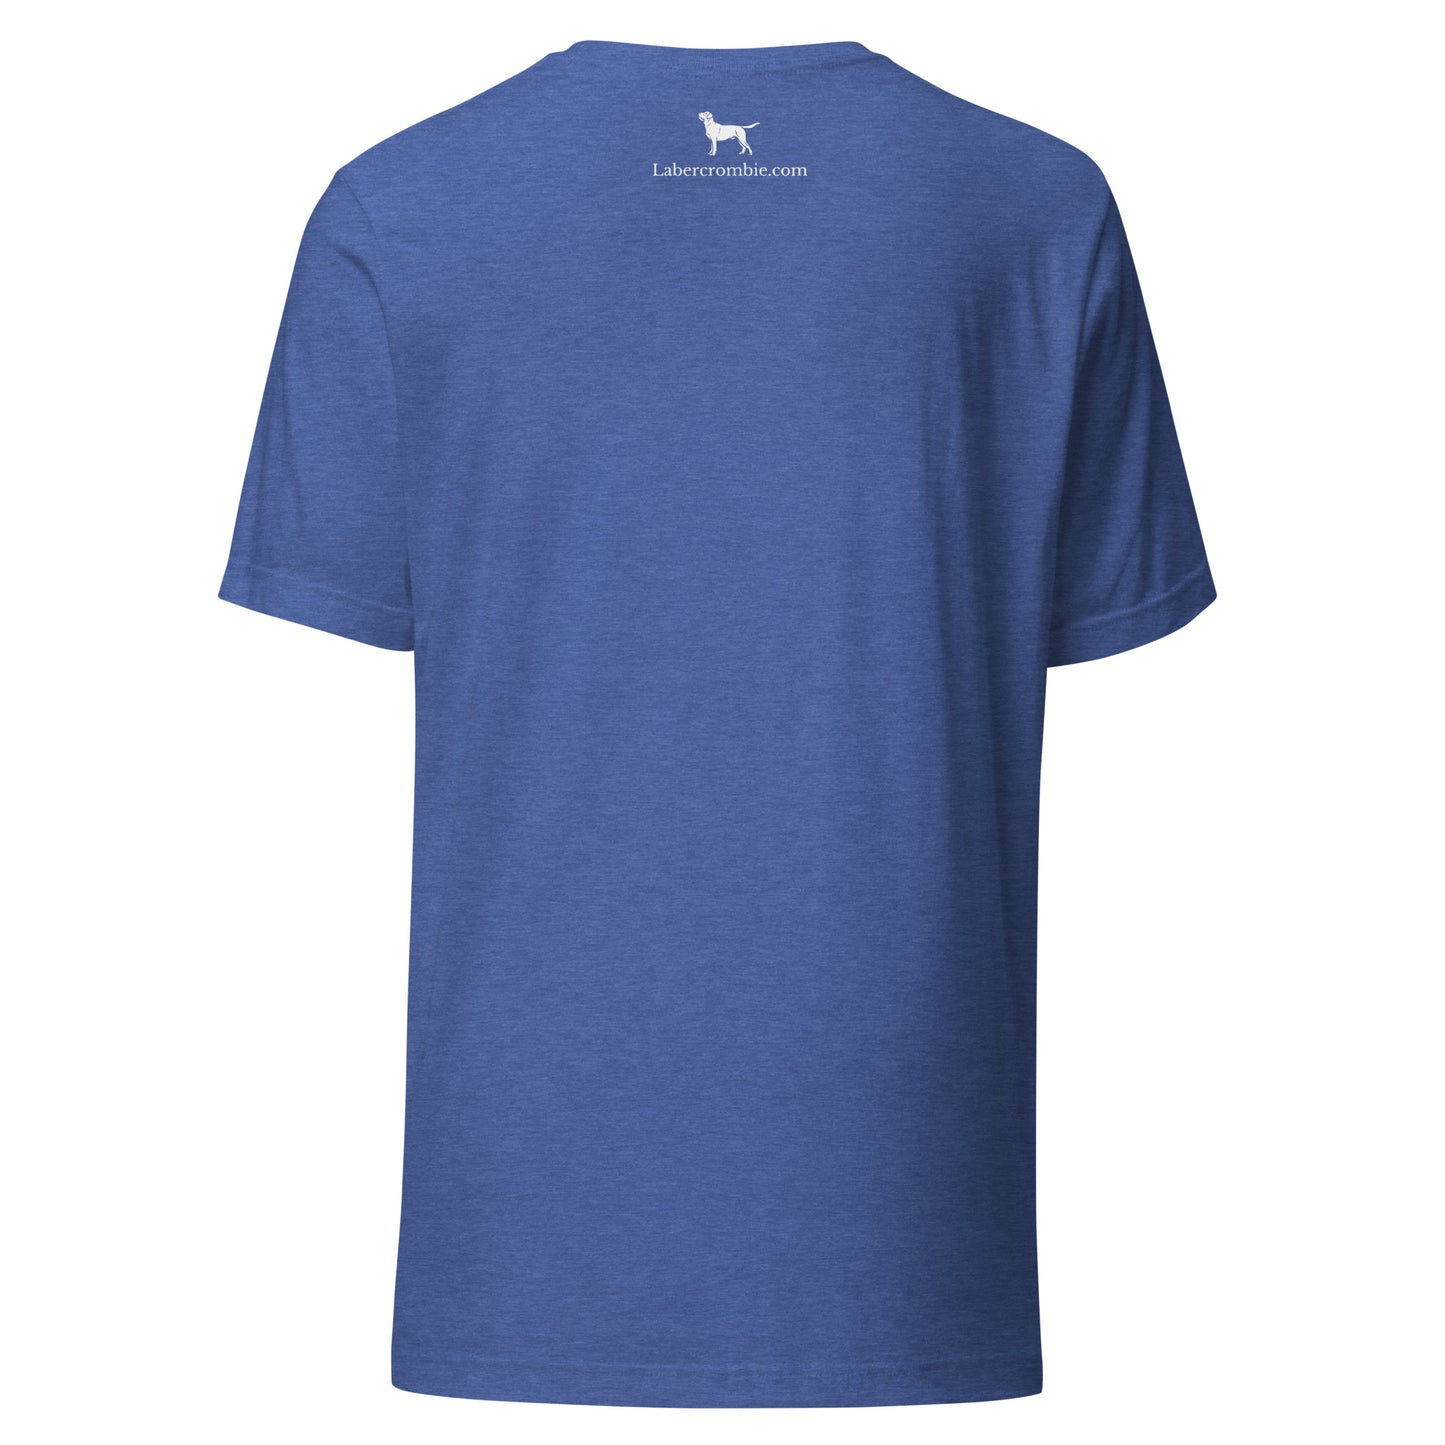 Prescott Lamb 24 Unisex t-shirt